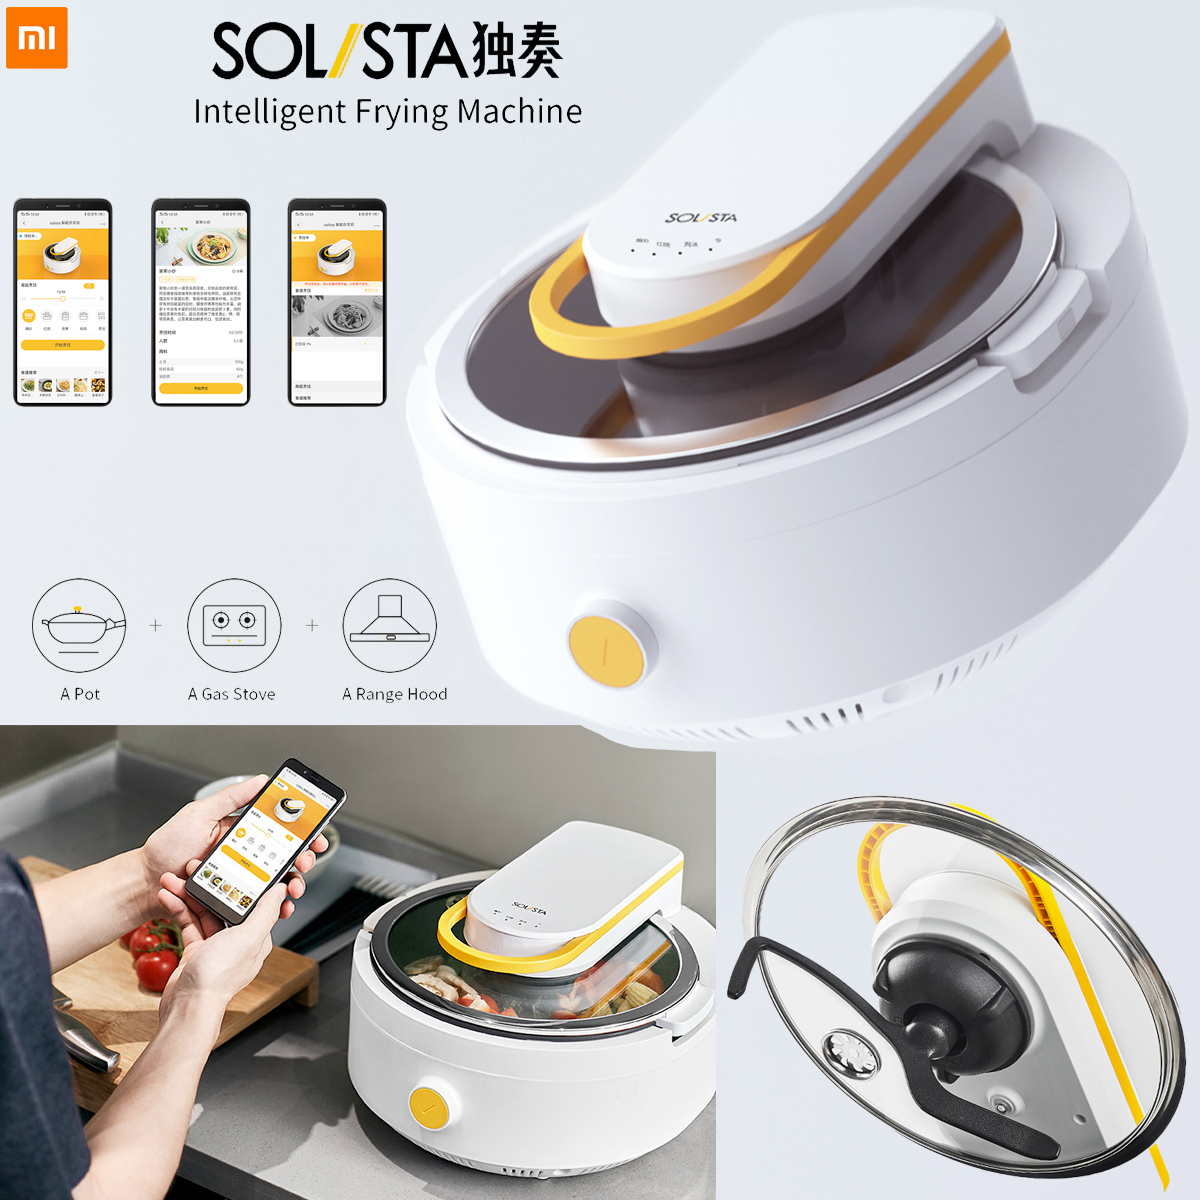 Panela Inteligente Eletrica Xiaomi Solista Solo Smart Cooking Machine